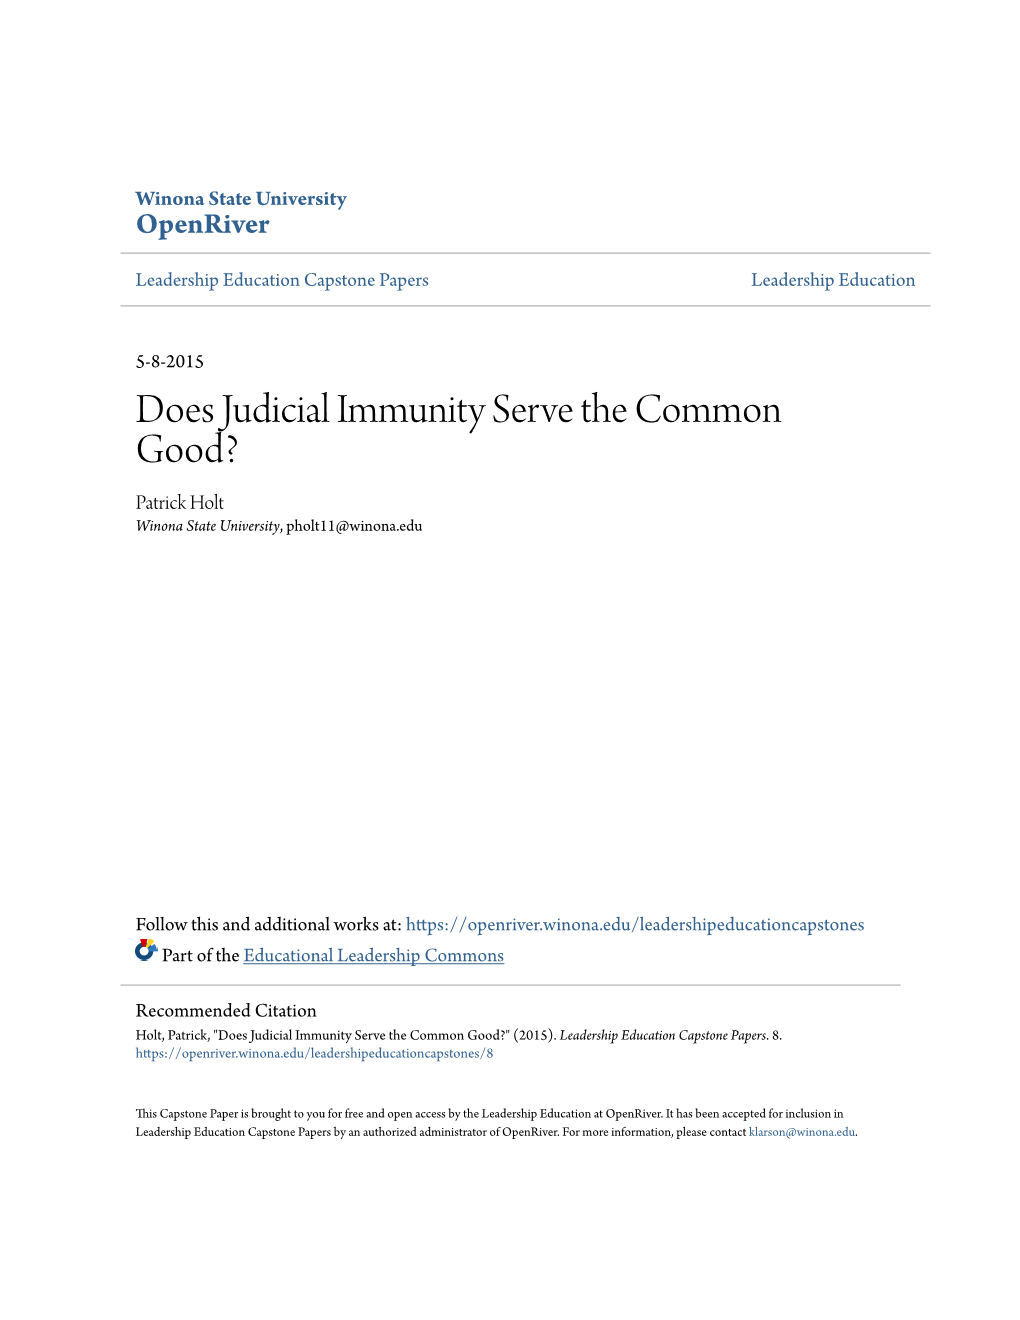 Does Judicial Immunity Serve the Common Good? Patrick Holt Winona State University, Pholt11@Winona.Edu